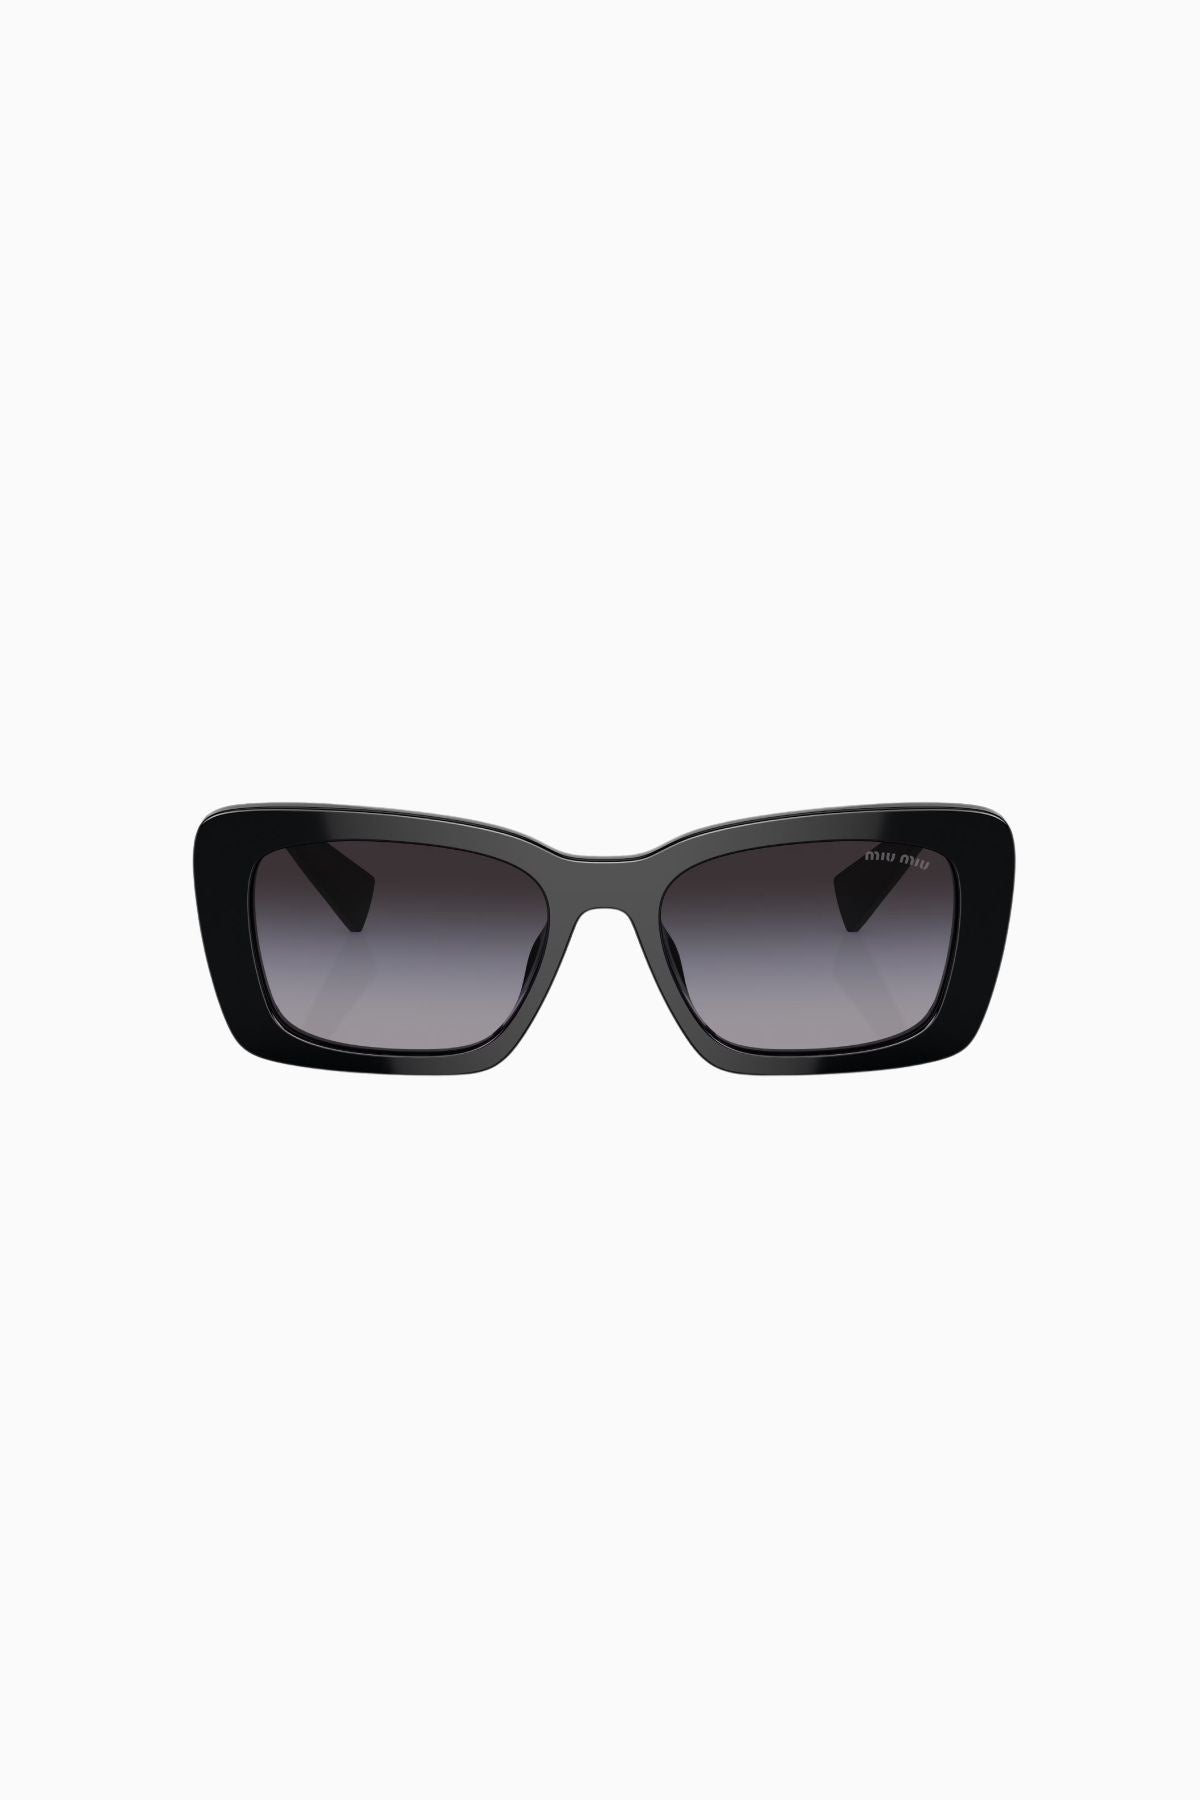 Miu Miu Rectangle Framed Sunglasses - Black/ Gradient Grey